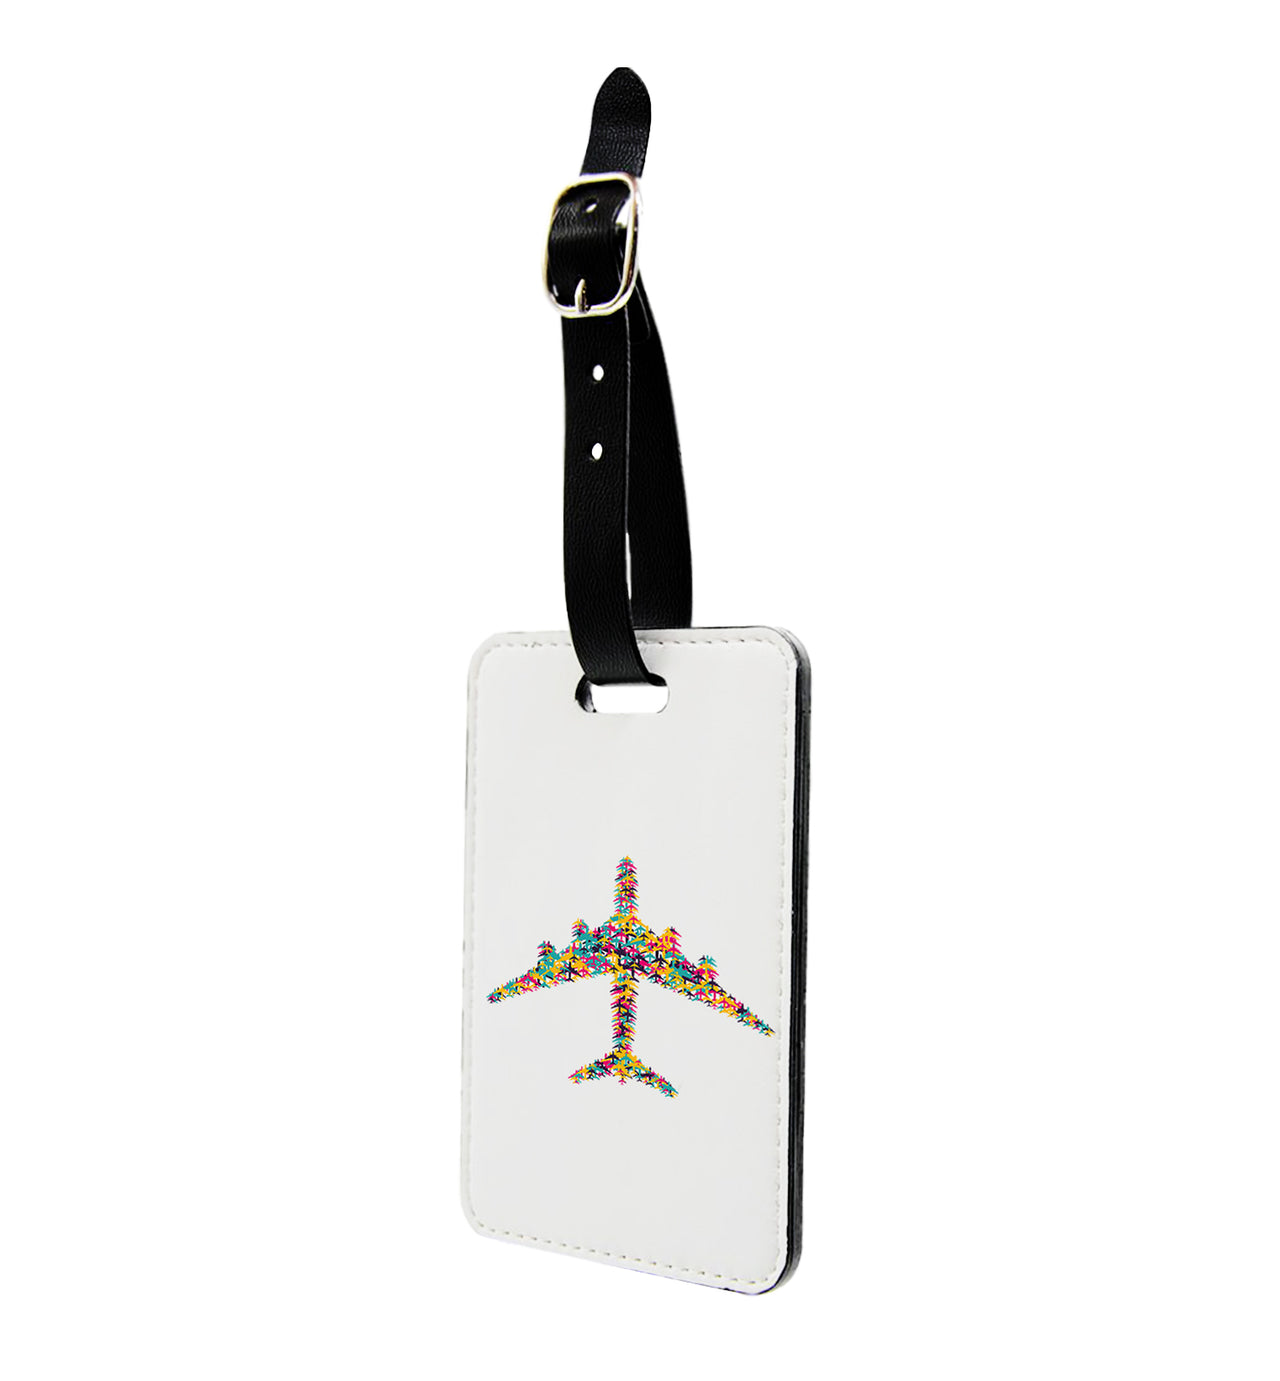 Colourful Airplane Designed Luggage Tag